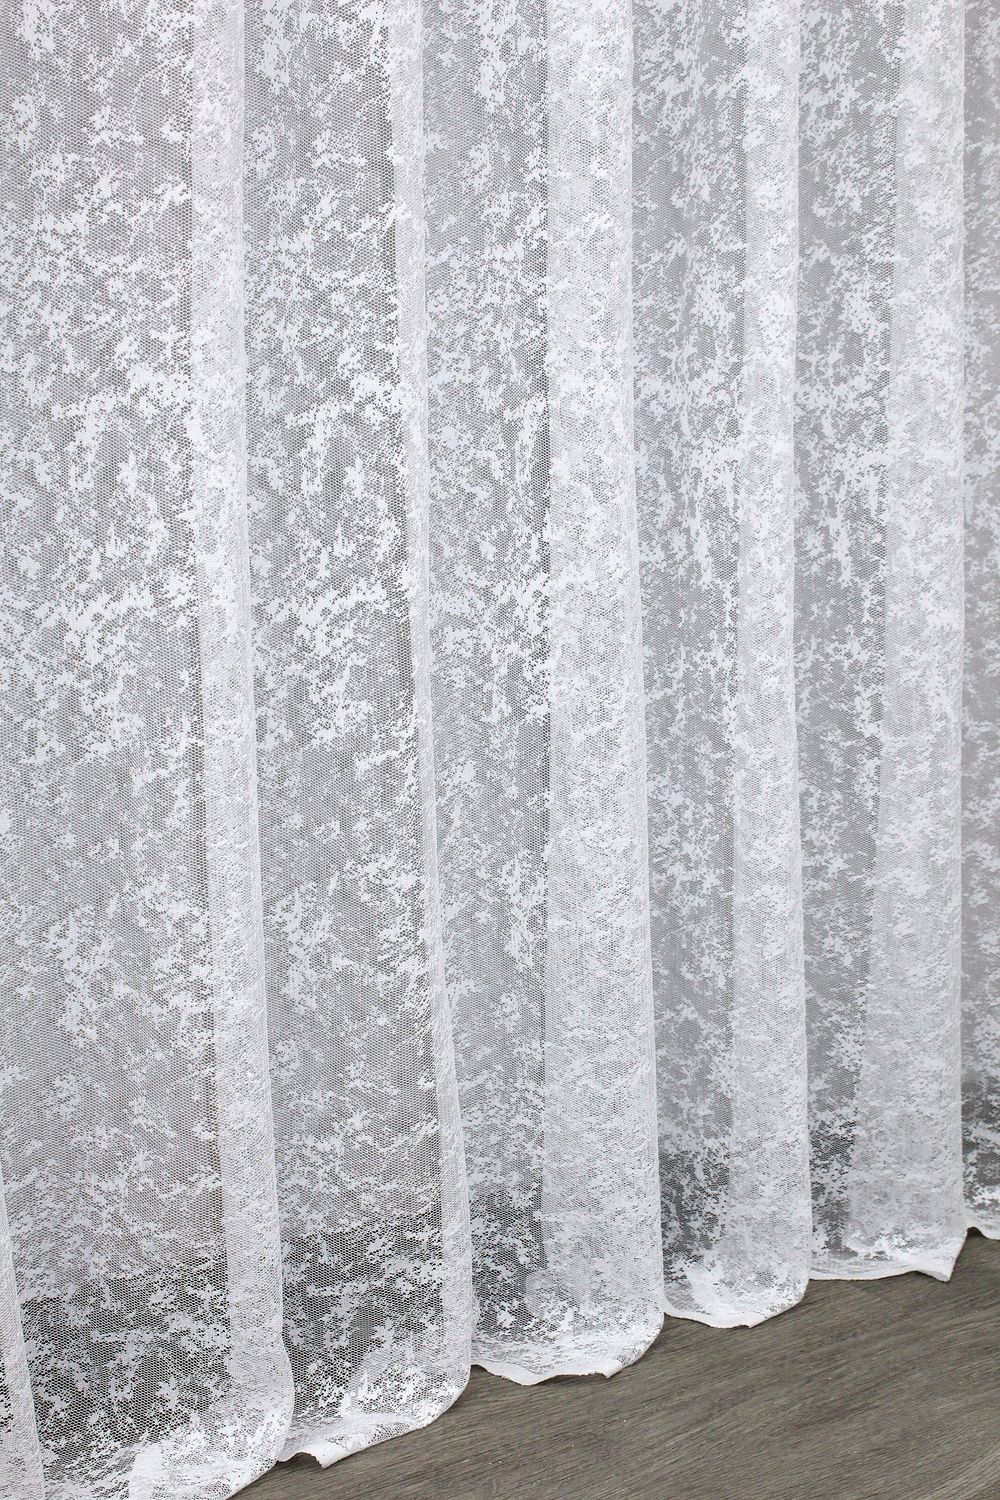 Тюль жаккард, колекція "Мармур Al-2" колір білий 702т, Готова тюль з тасьмою (2,5х2,7м.), 2,5 м., 2,7 м., 250, 270, 1 - 1,5 м., Тасьма